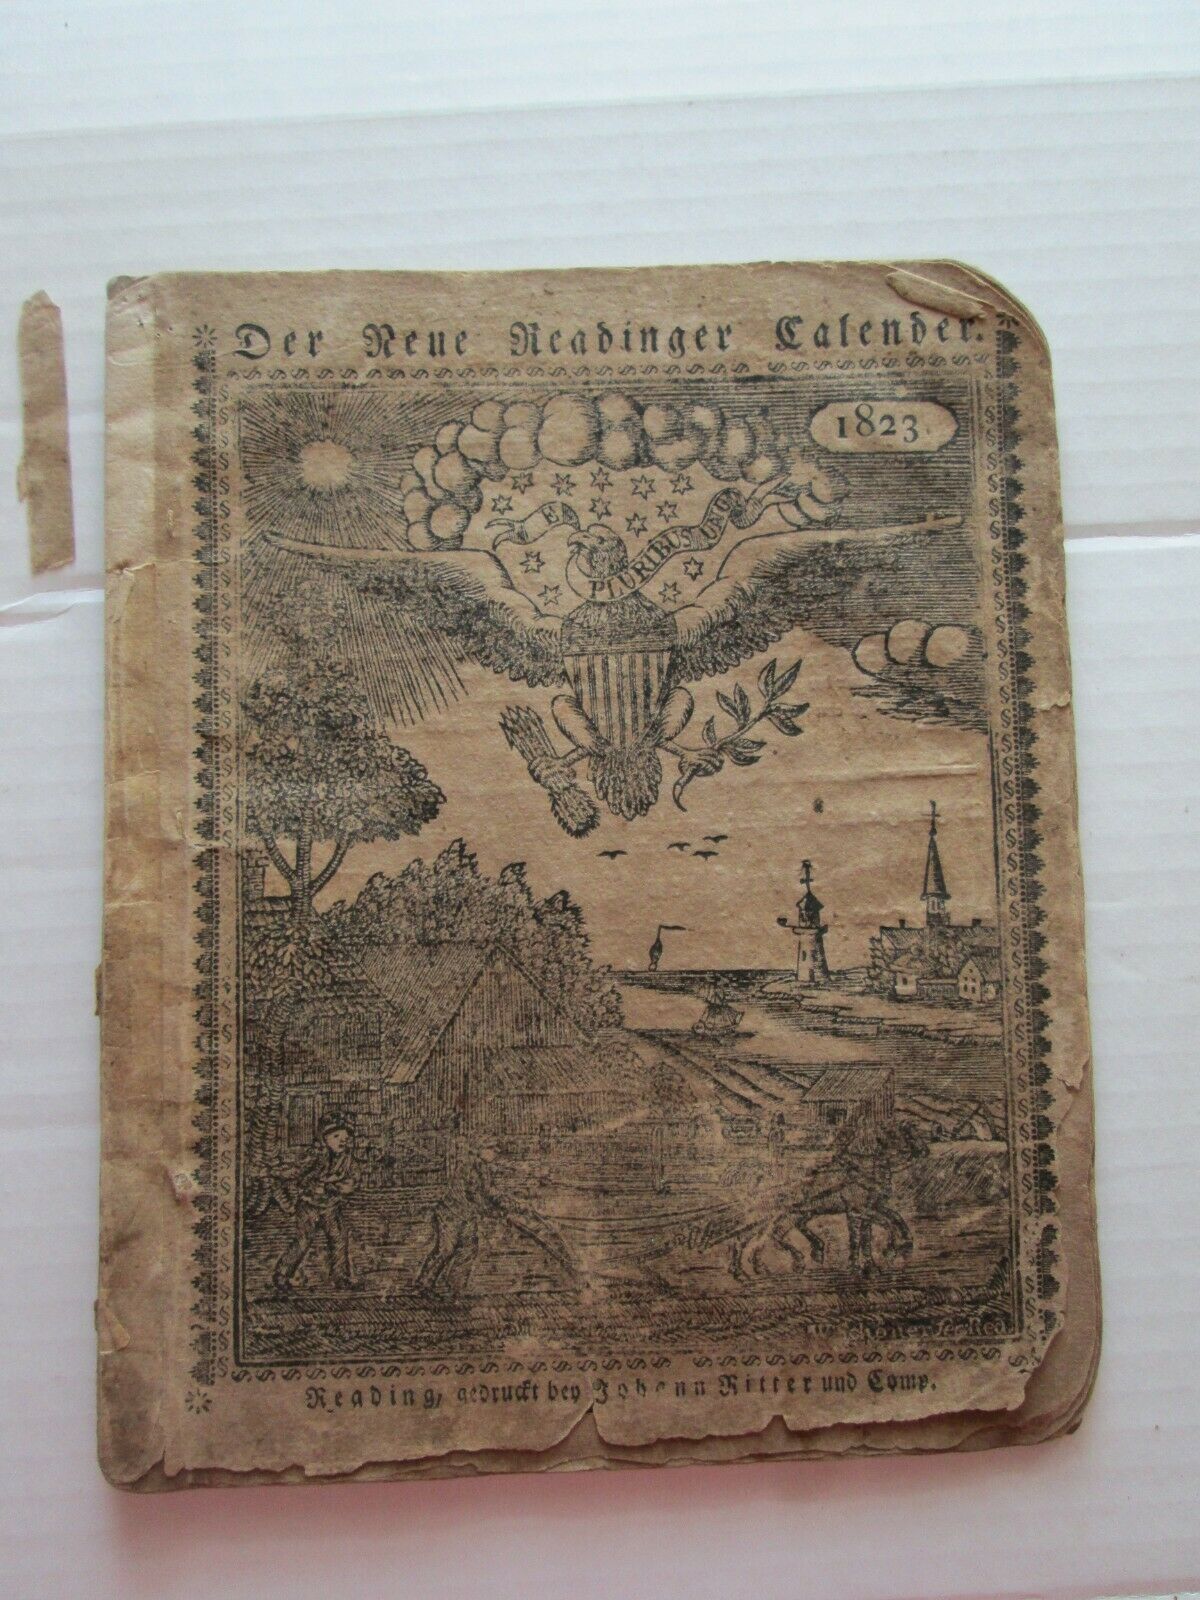 One (1) Original 1823 German Almanac, "der Rene Headinger Calender" As Seen